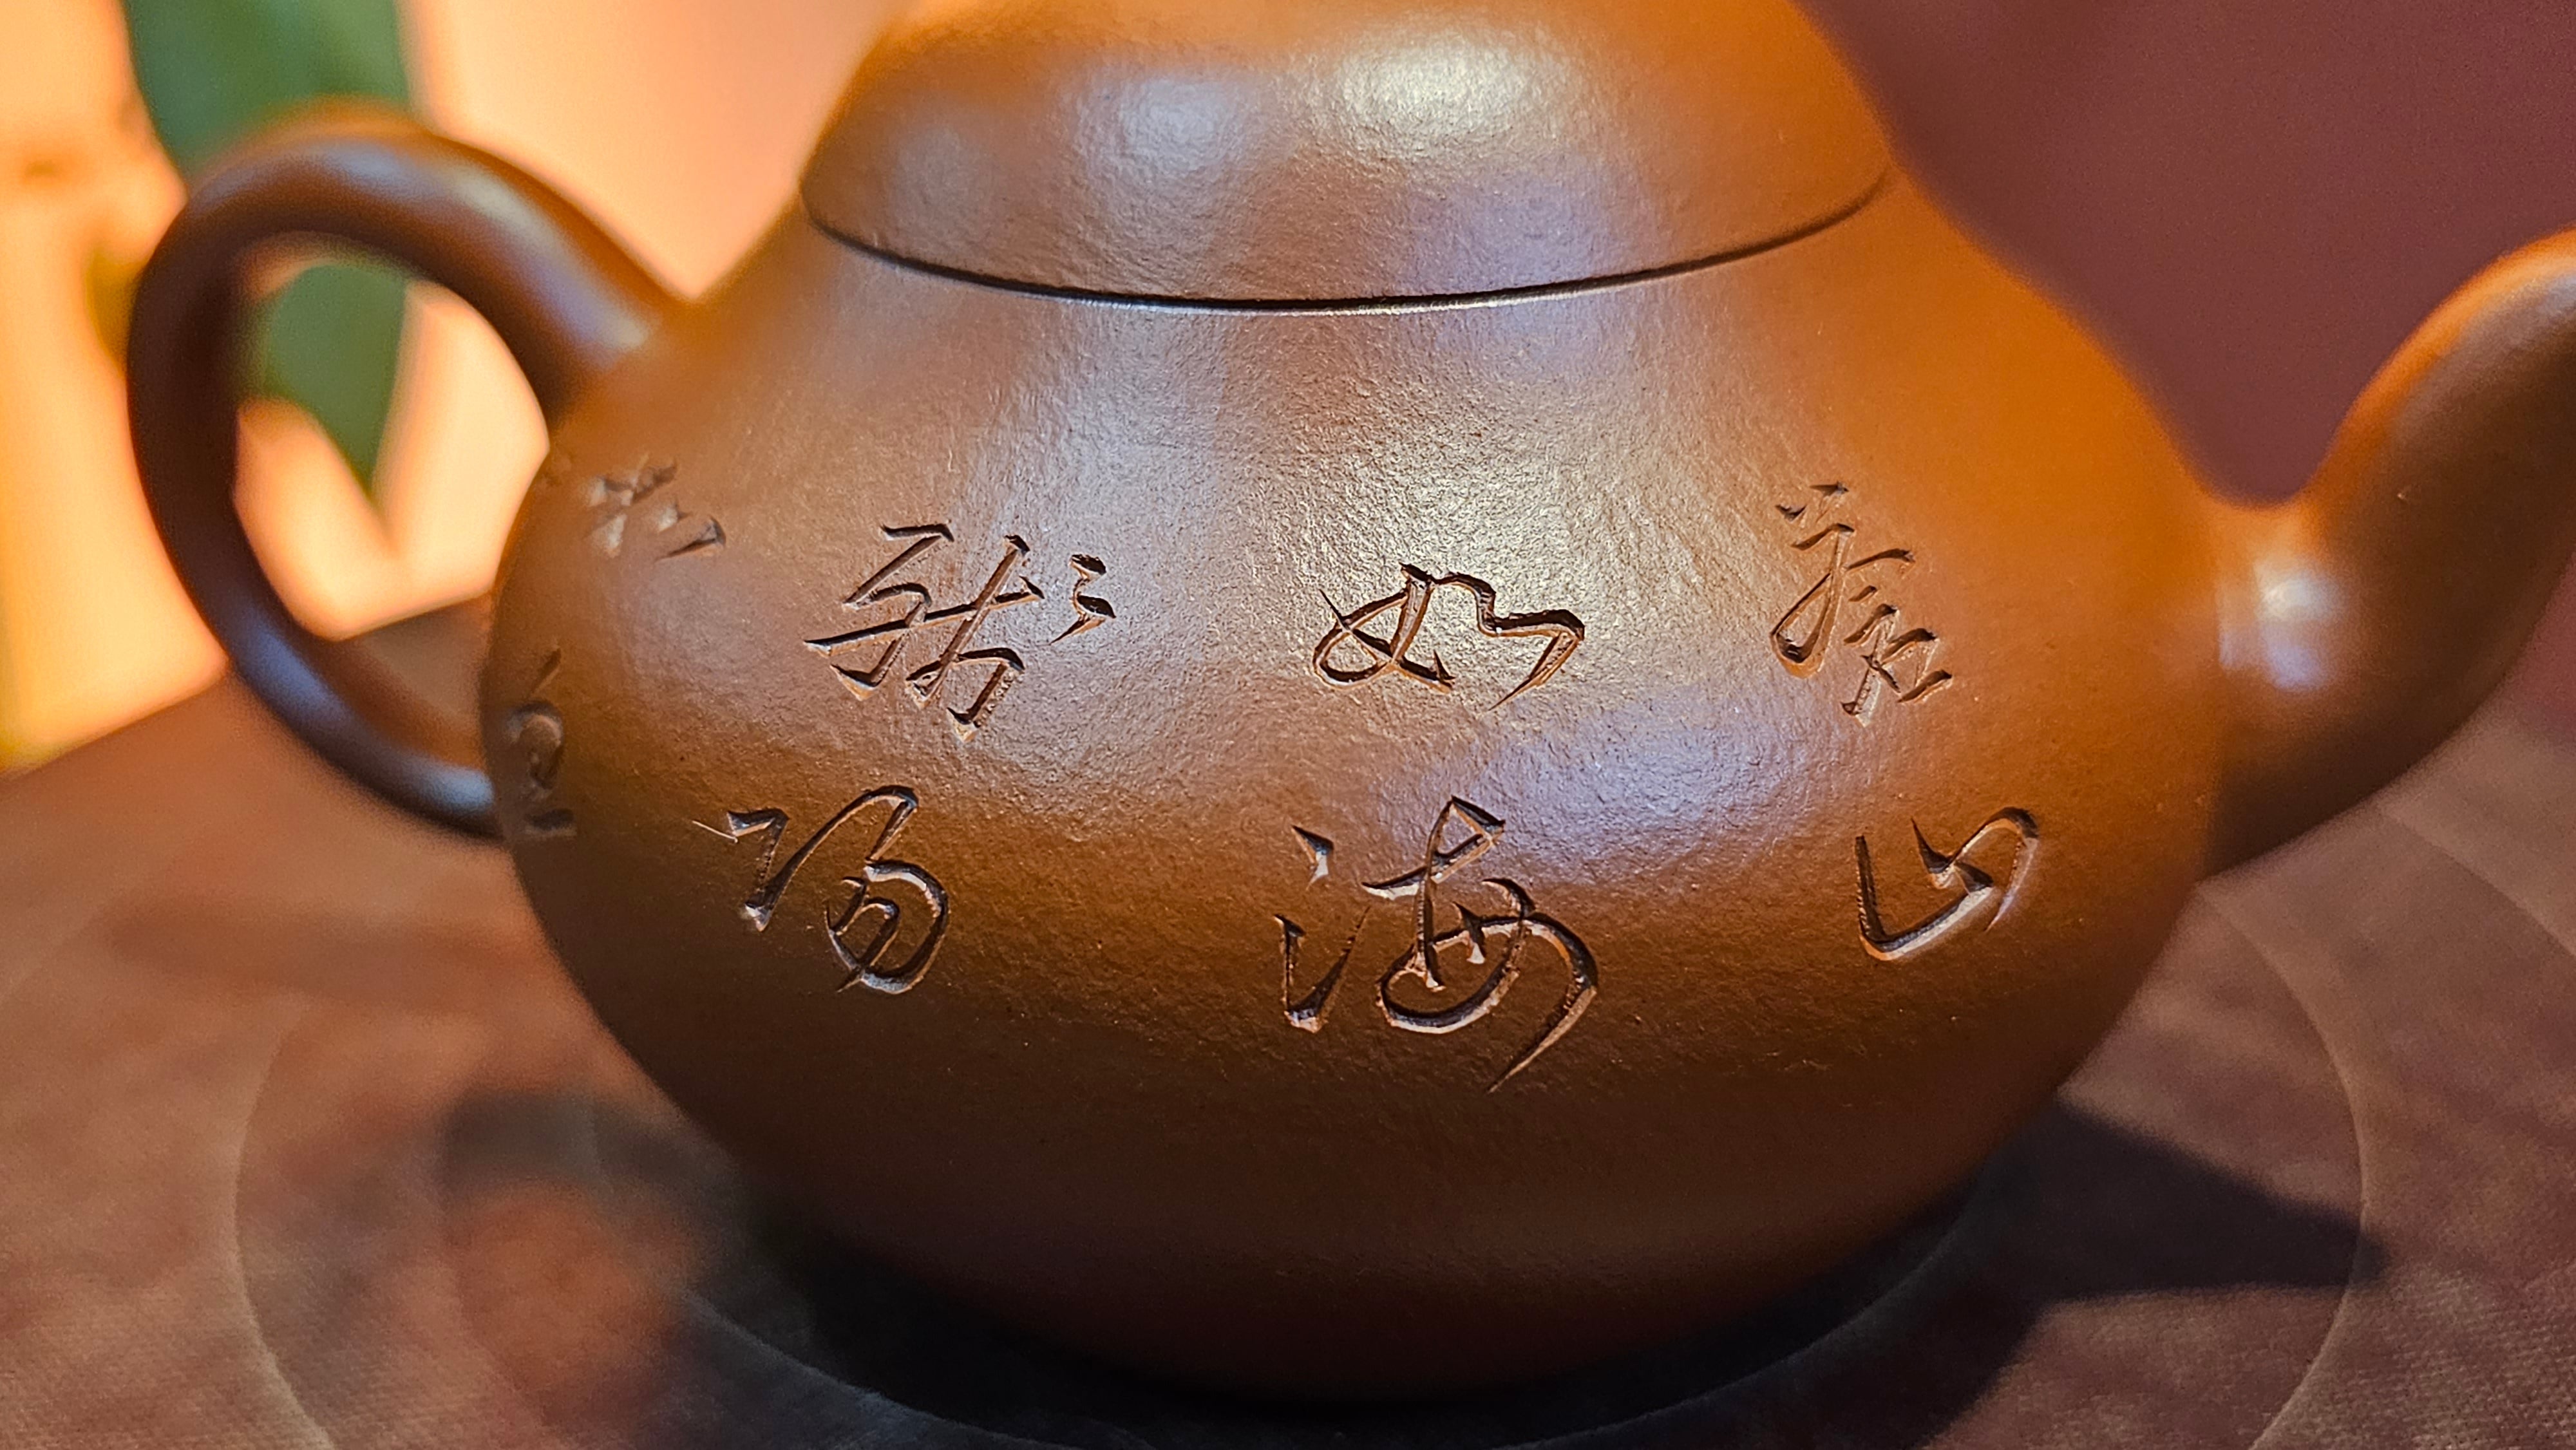 Li Xing 梨形, 146.2ml, ZhaoZhuang ZhuNi 赵庄朱泥, by Craftsman Zhao Xiao Wei 赵小卫 + Bamboo Engraving and Inscription by L4 Artist Xing Su 行素。